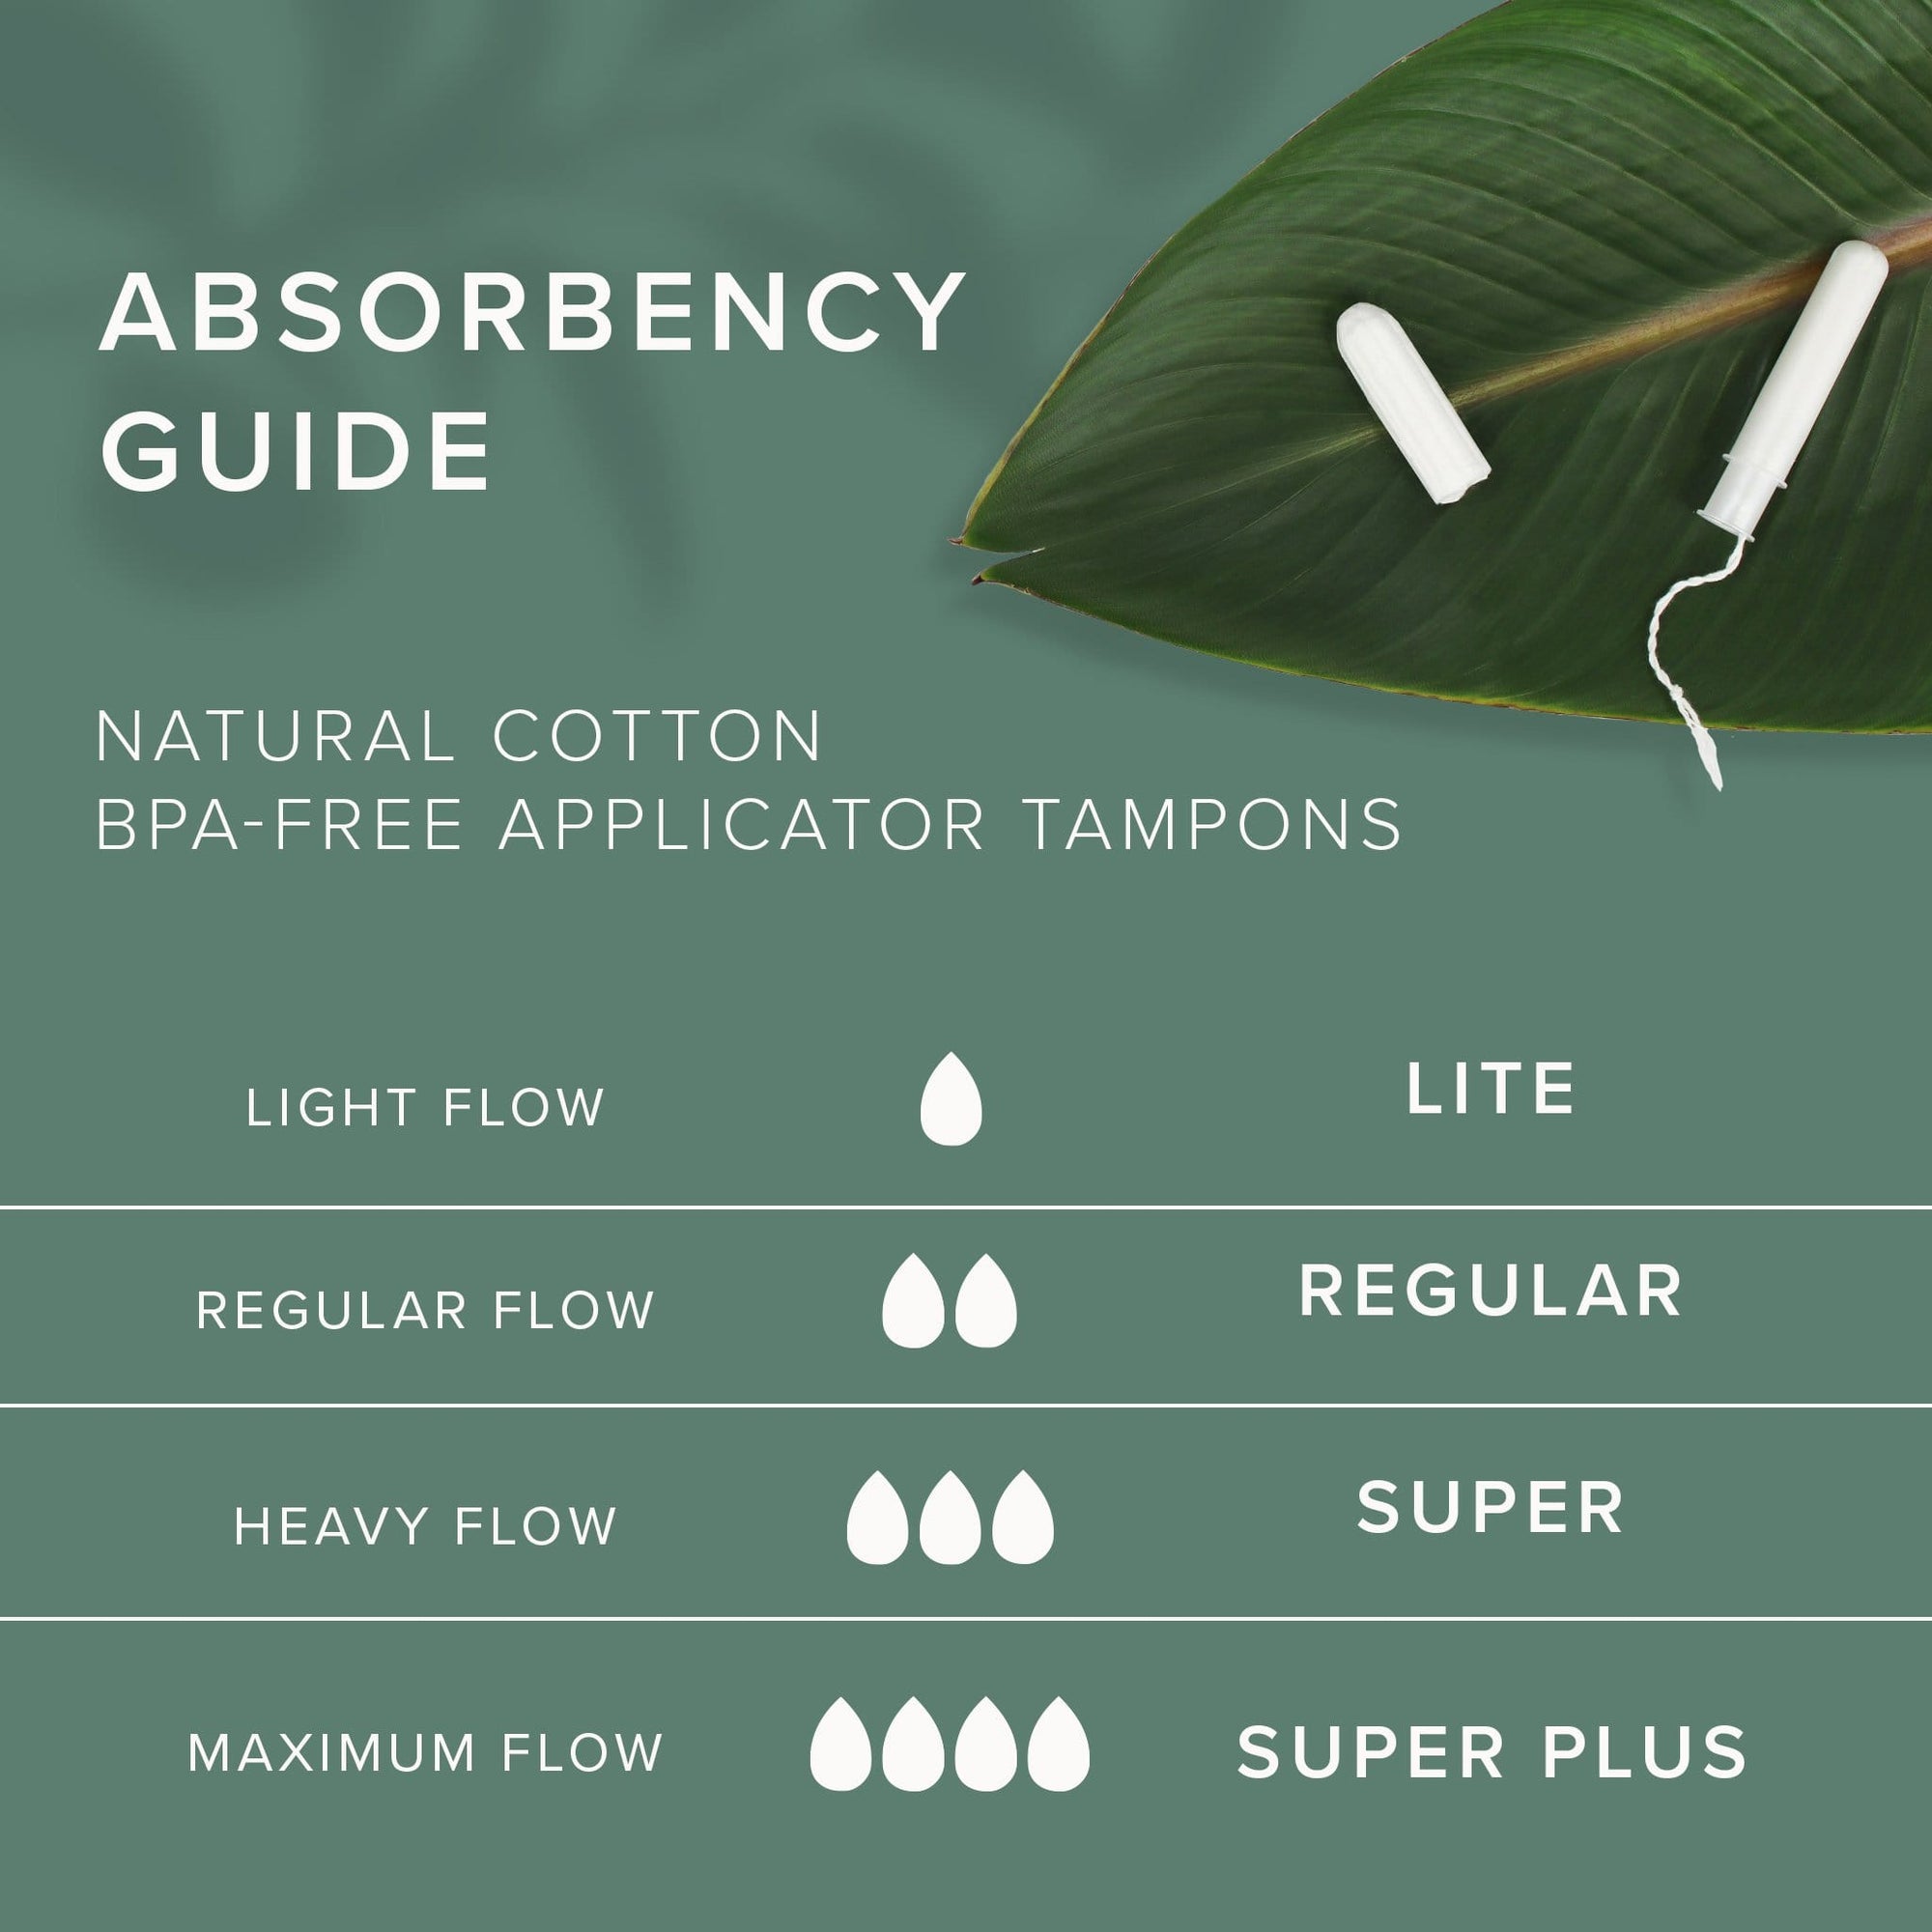 Veeda 100% Natural Cotton SUPER Tampons - Happy Little Camper Aus